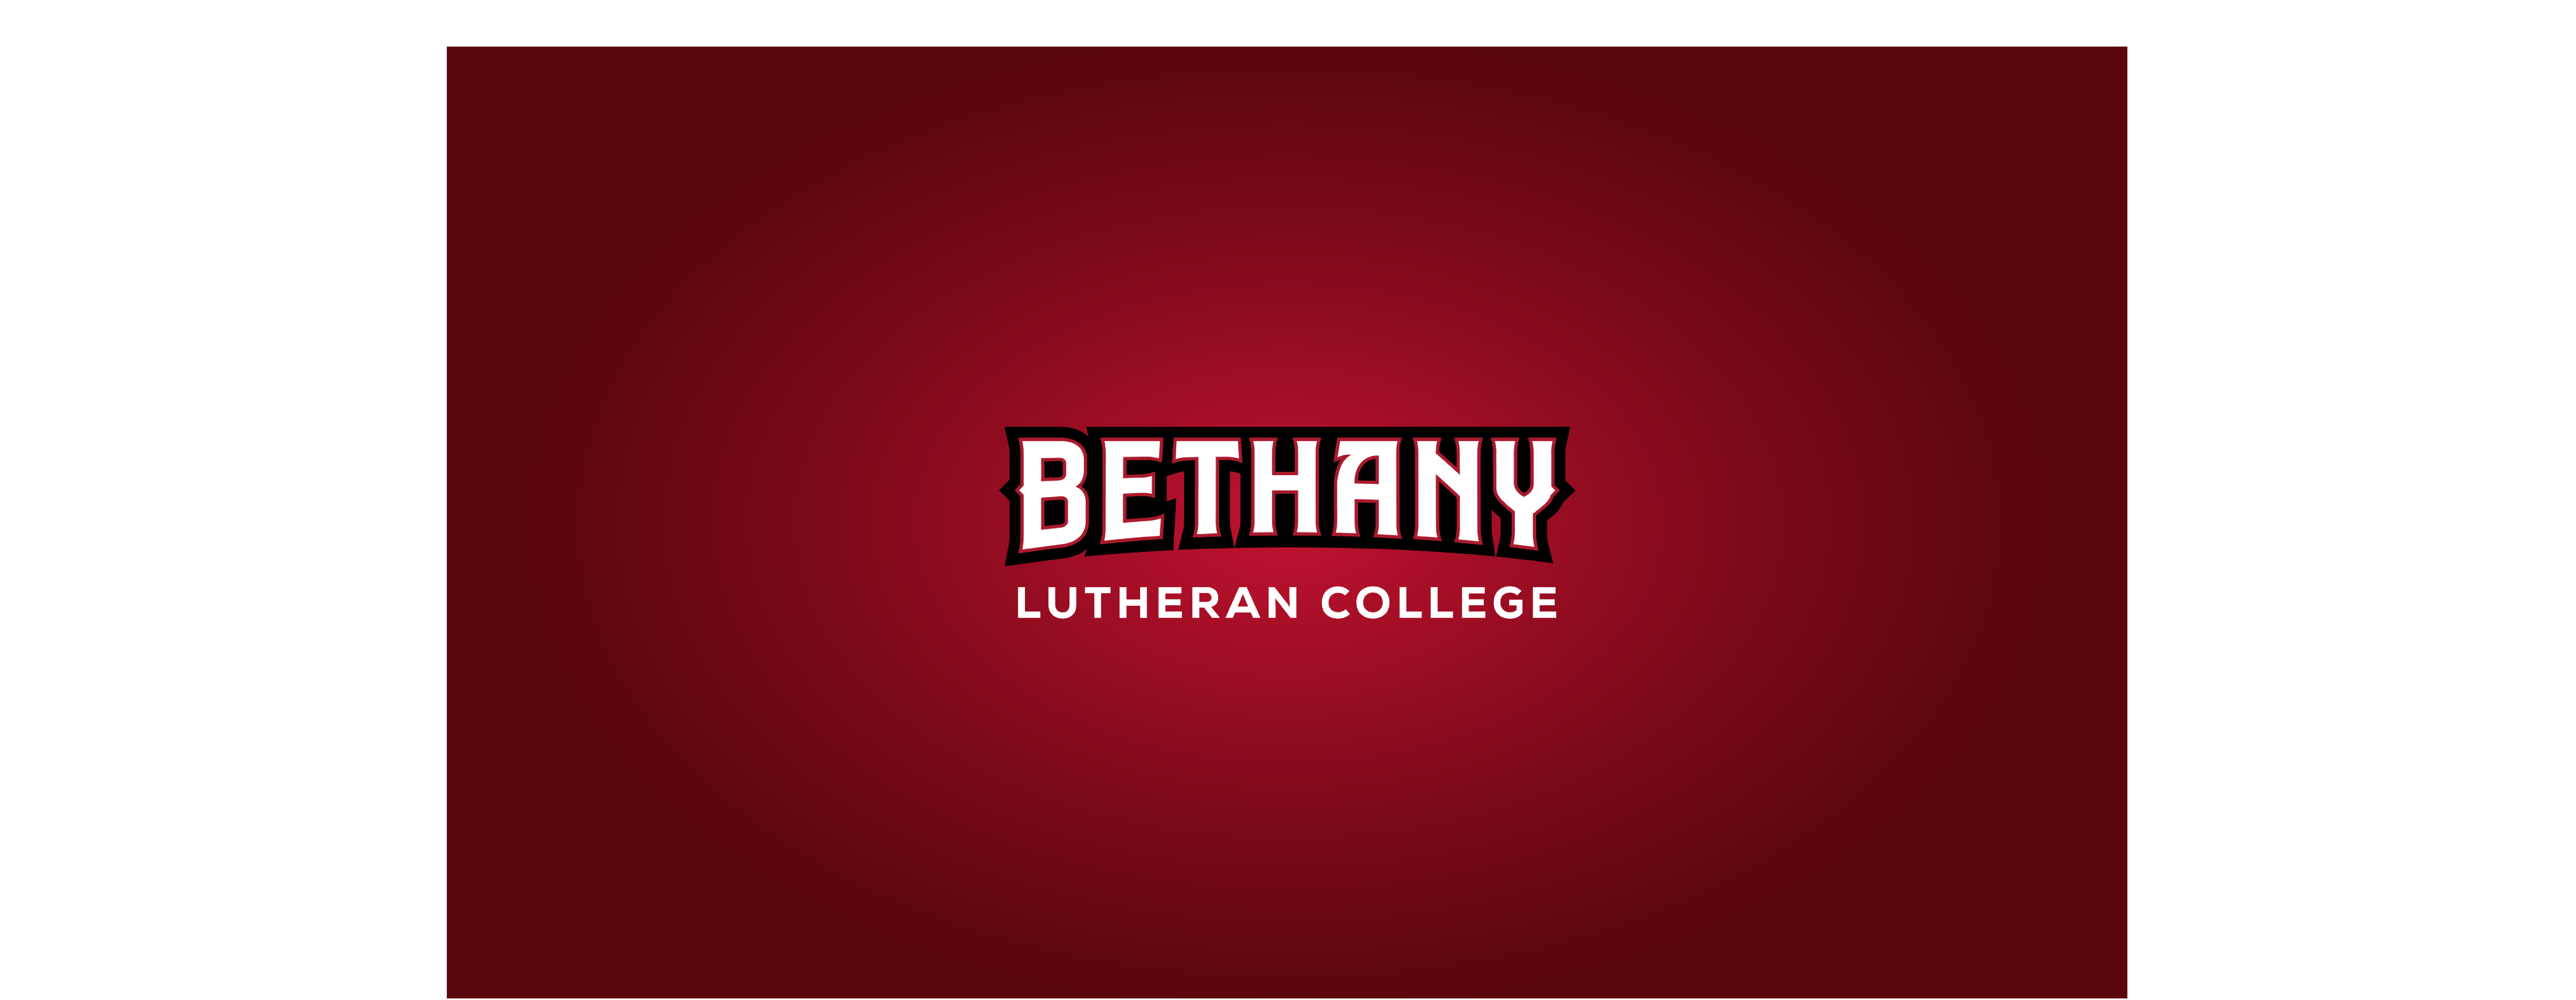 Bethany Lutheran College, logo.